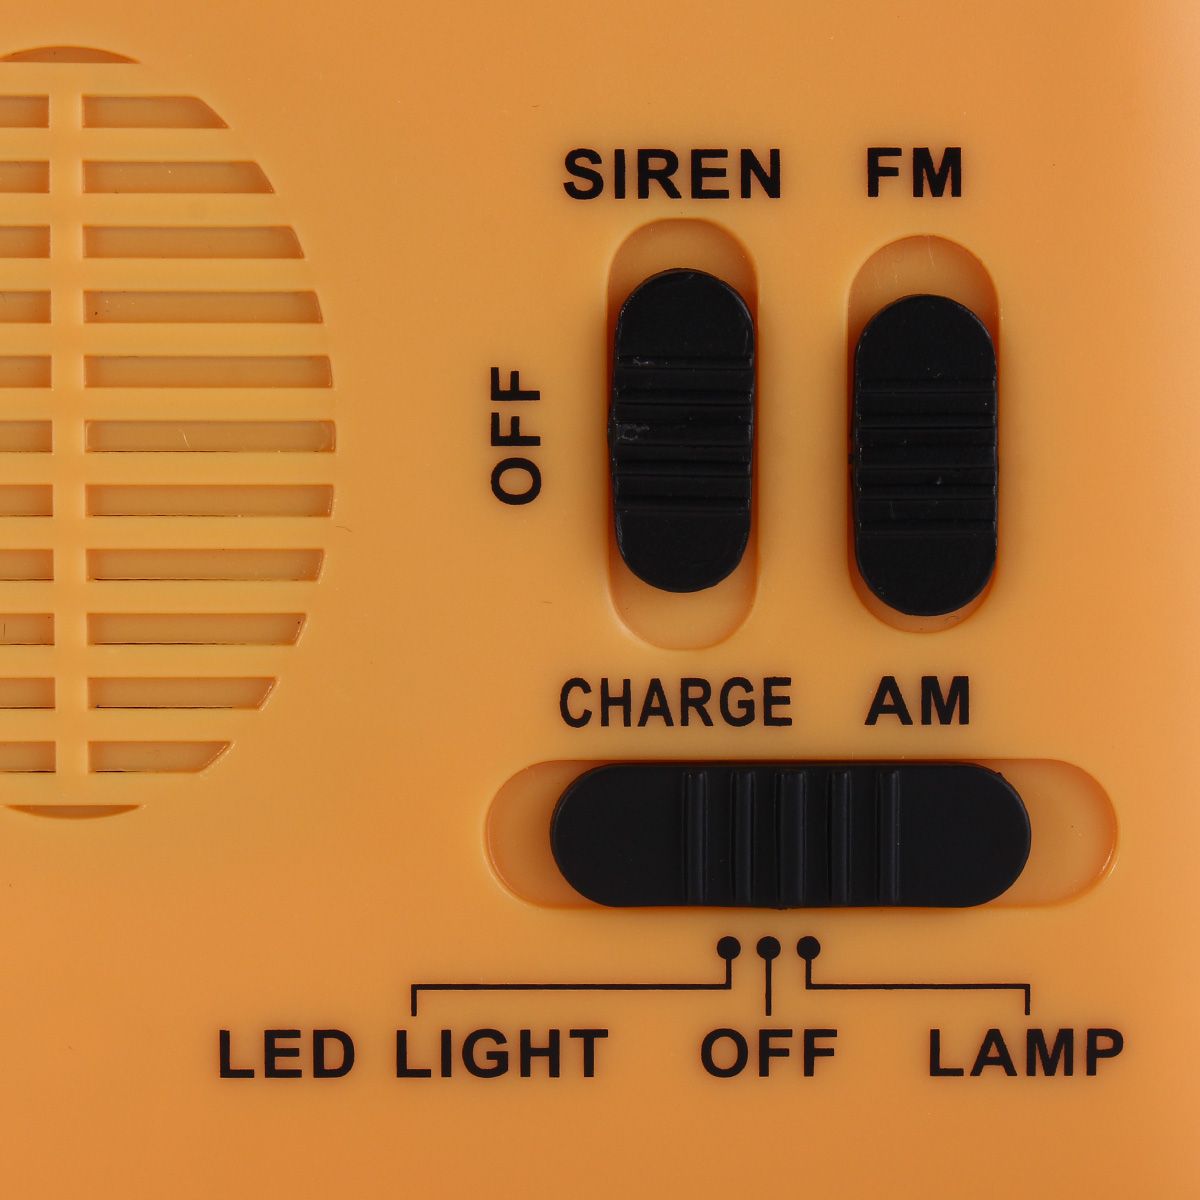 RD339-Solar-Powered-AM-FM-Radio-with-Flashlight-Lamp-1648242